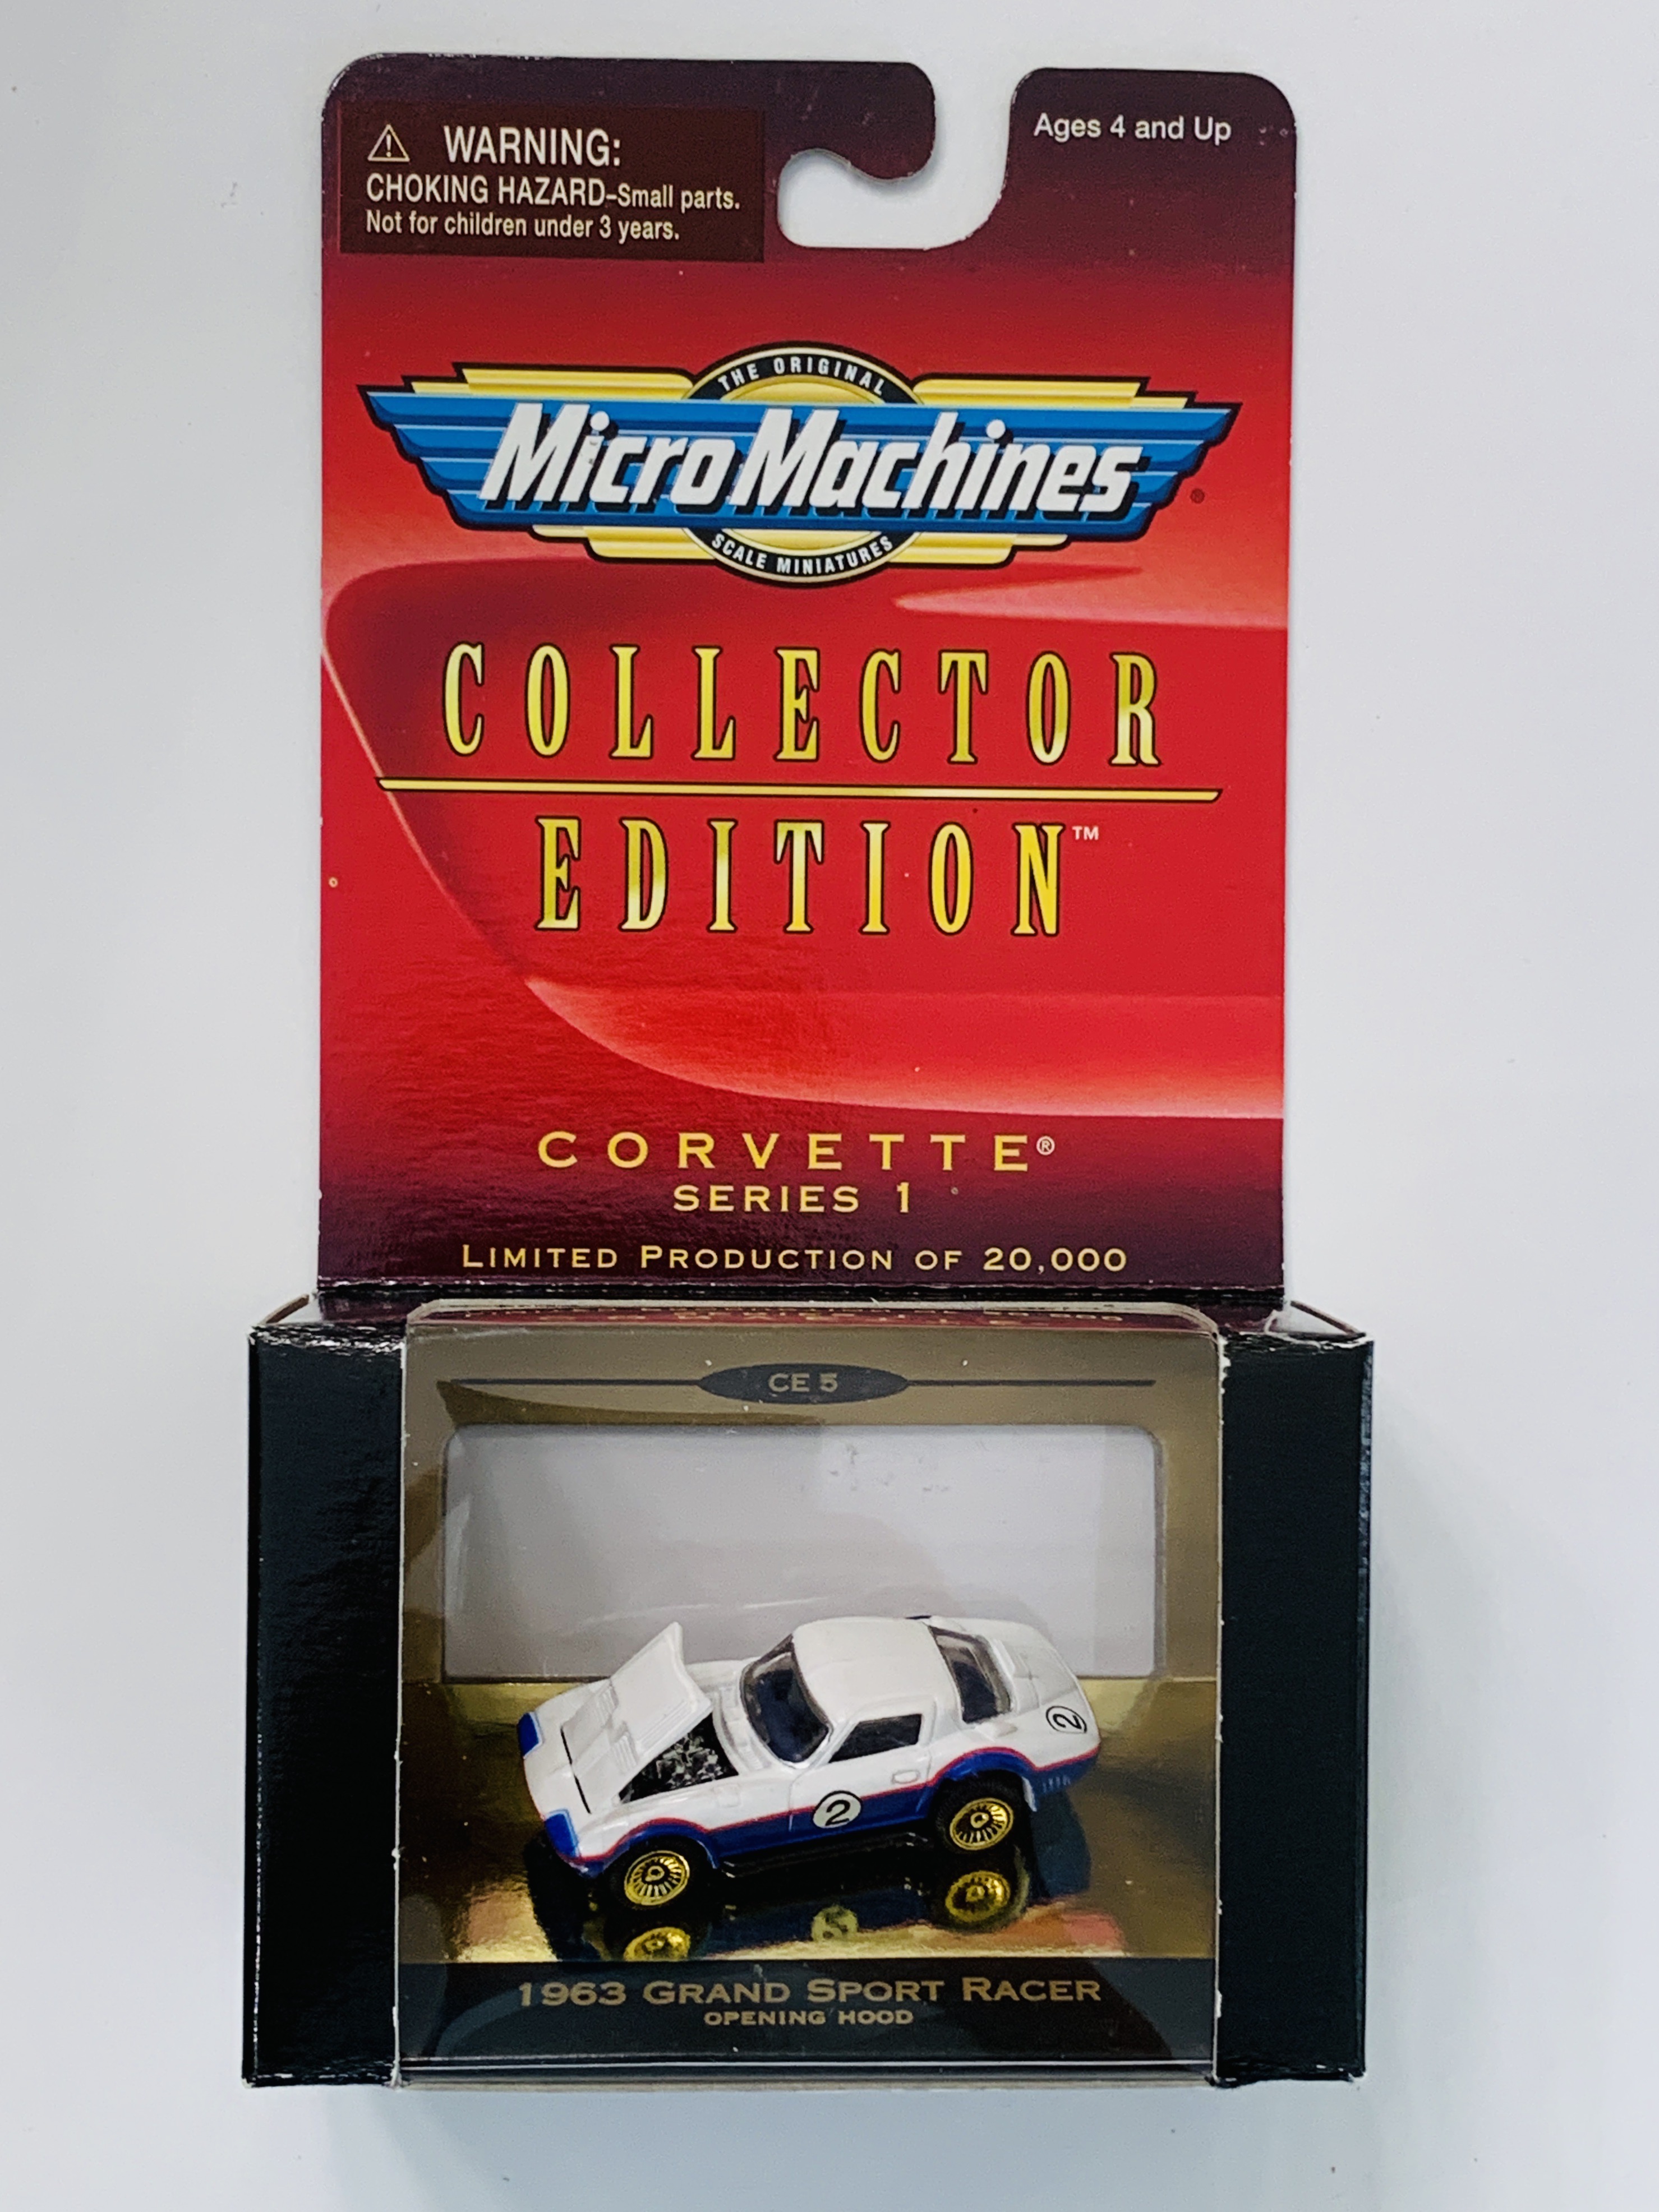 Micro Machines Collector Edition Corvette Series 1 1963 Grand Sport Racer